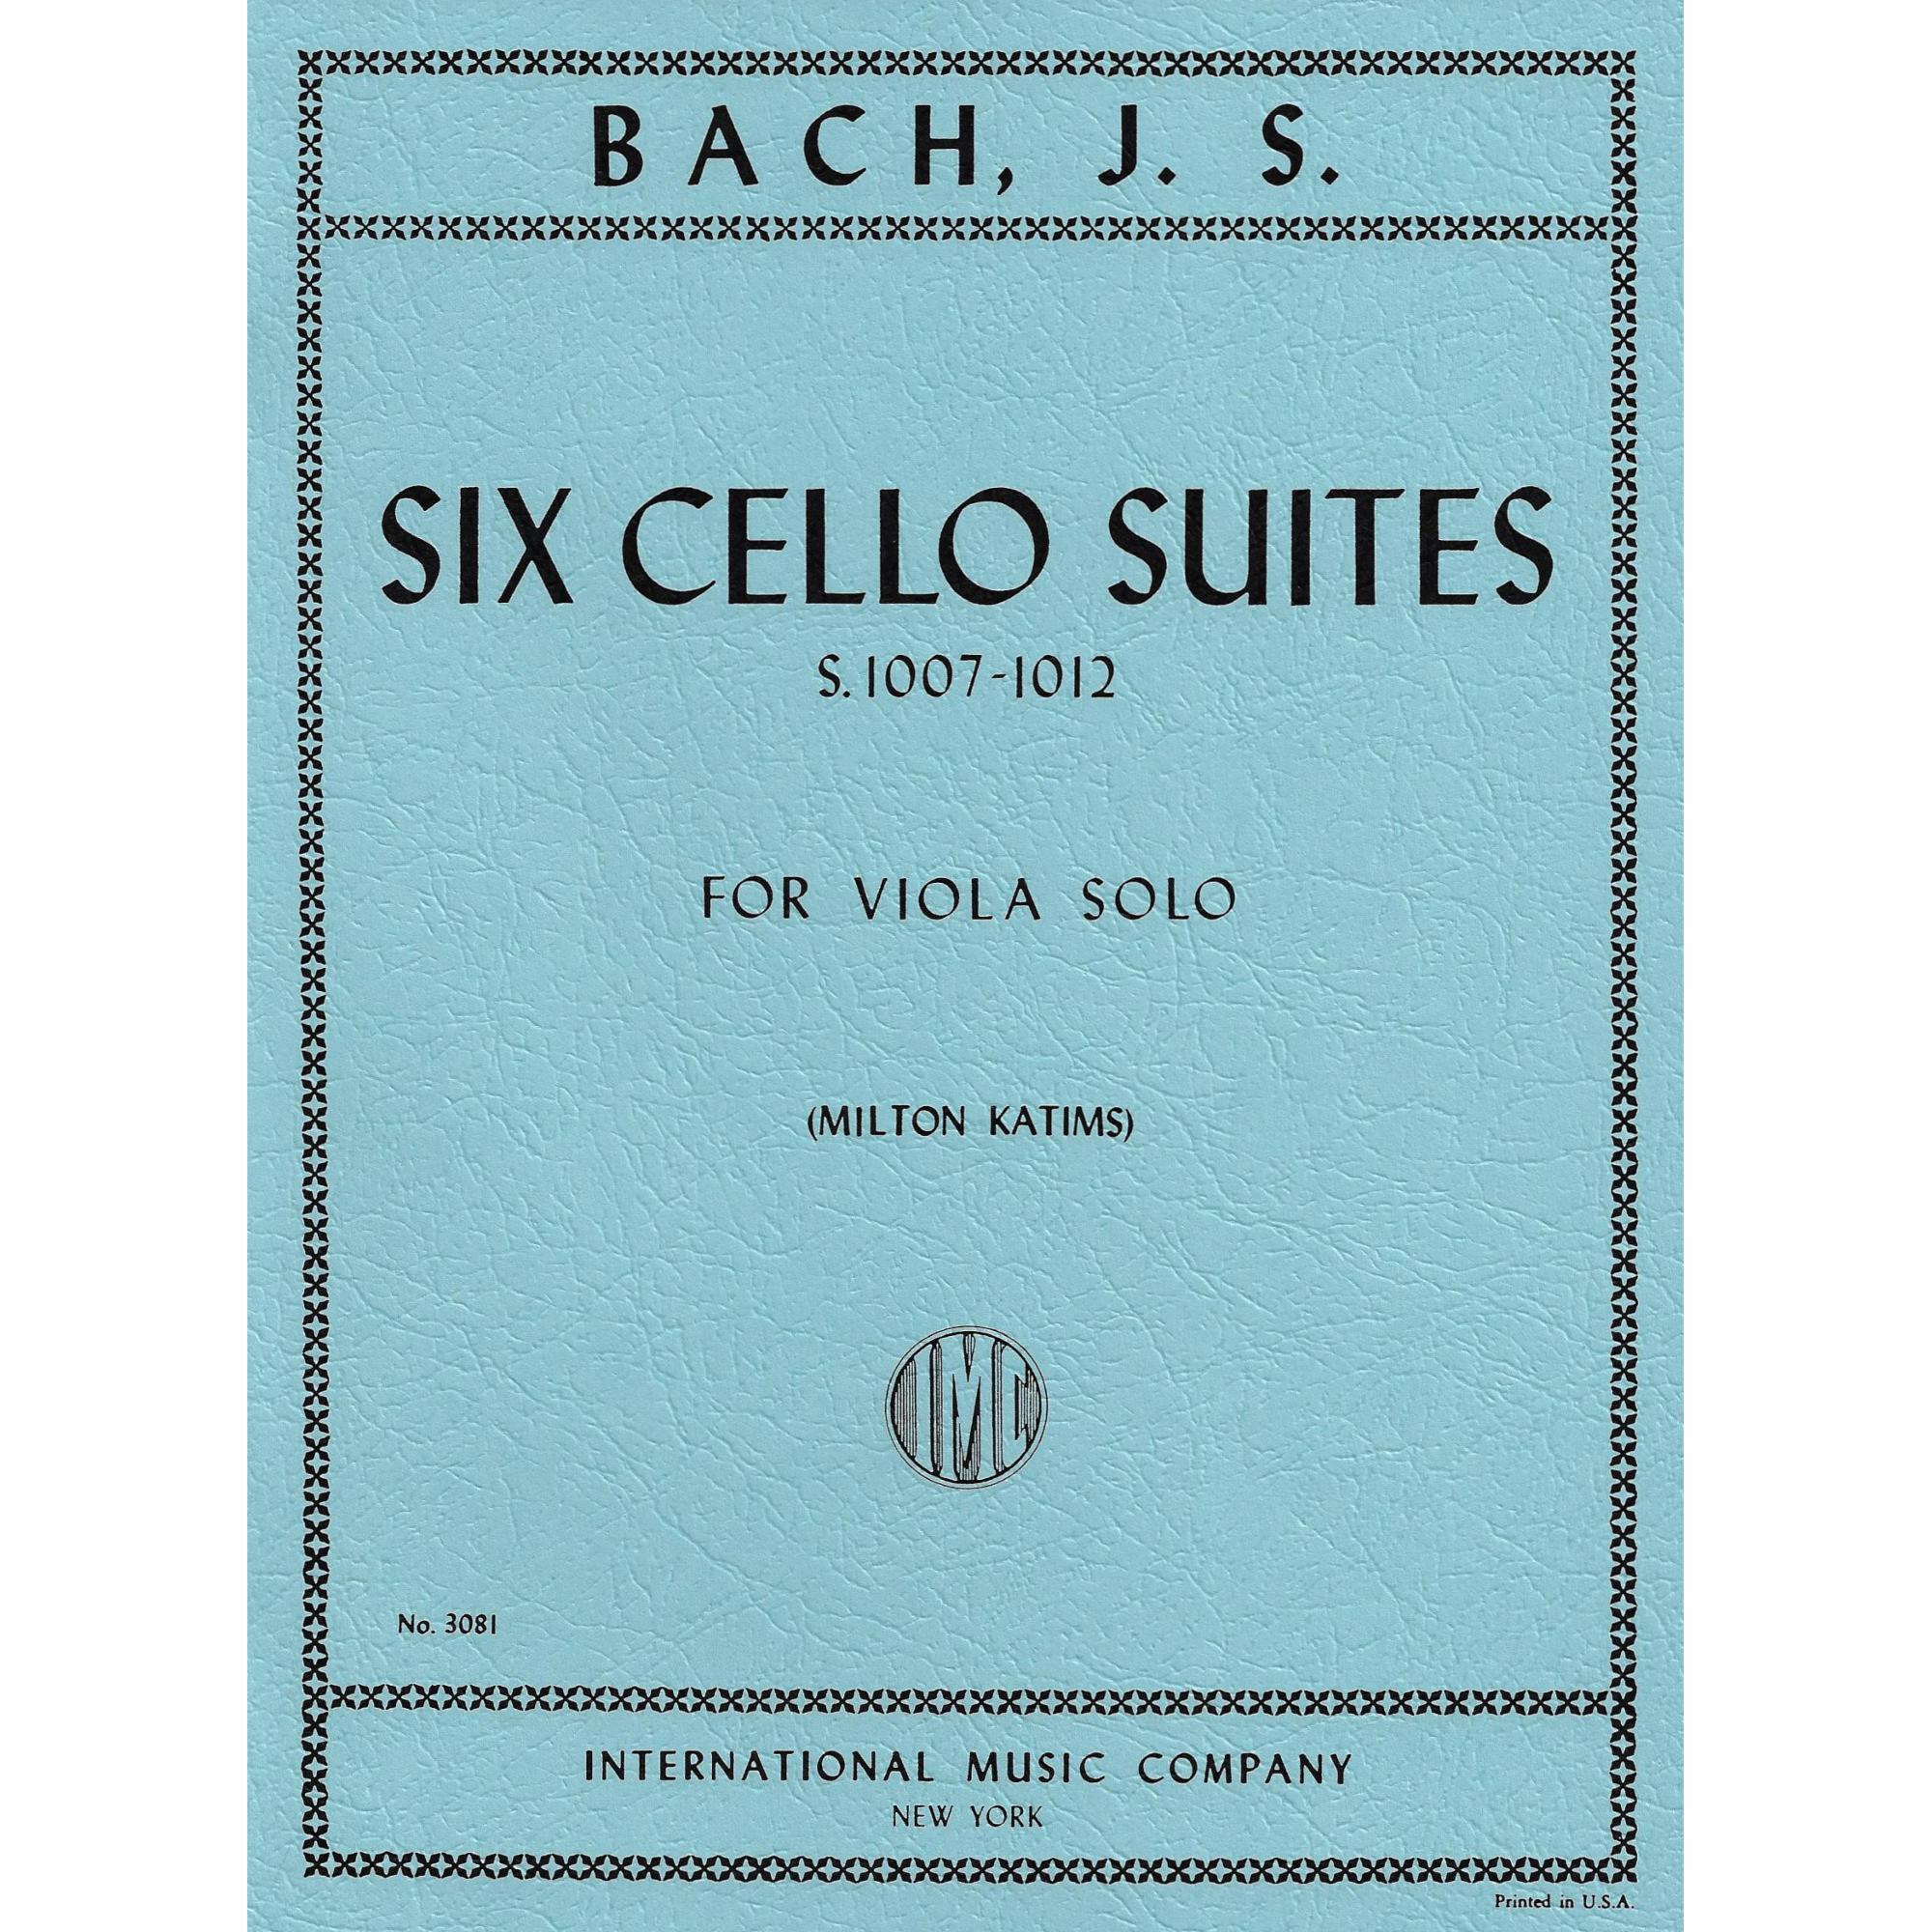 Bach -- Six Cello Suites, S. 1007-1012 for Solo Viola